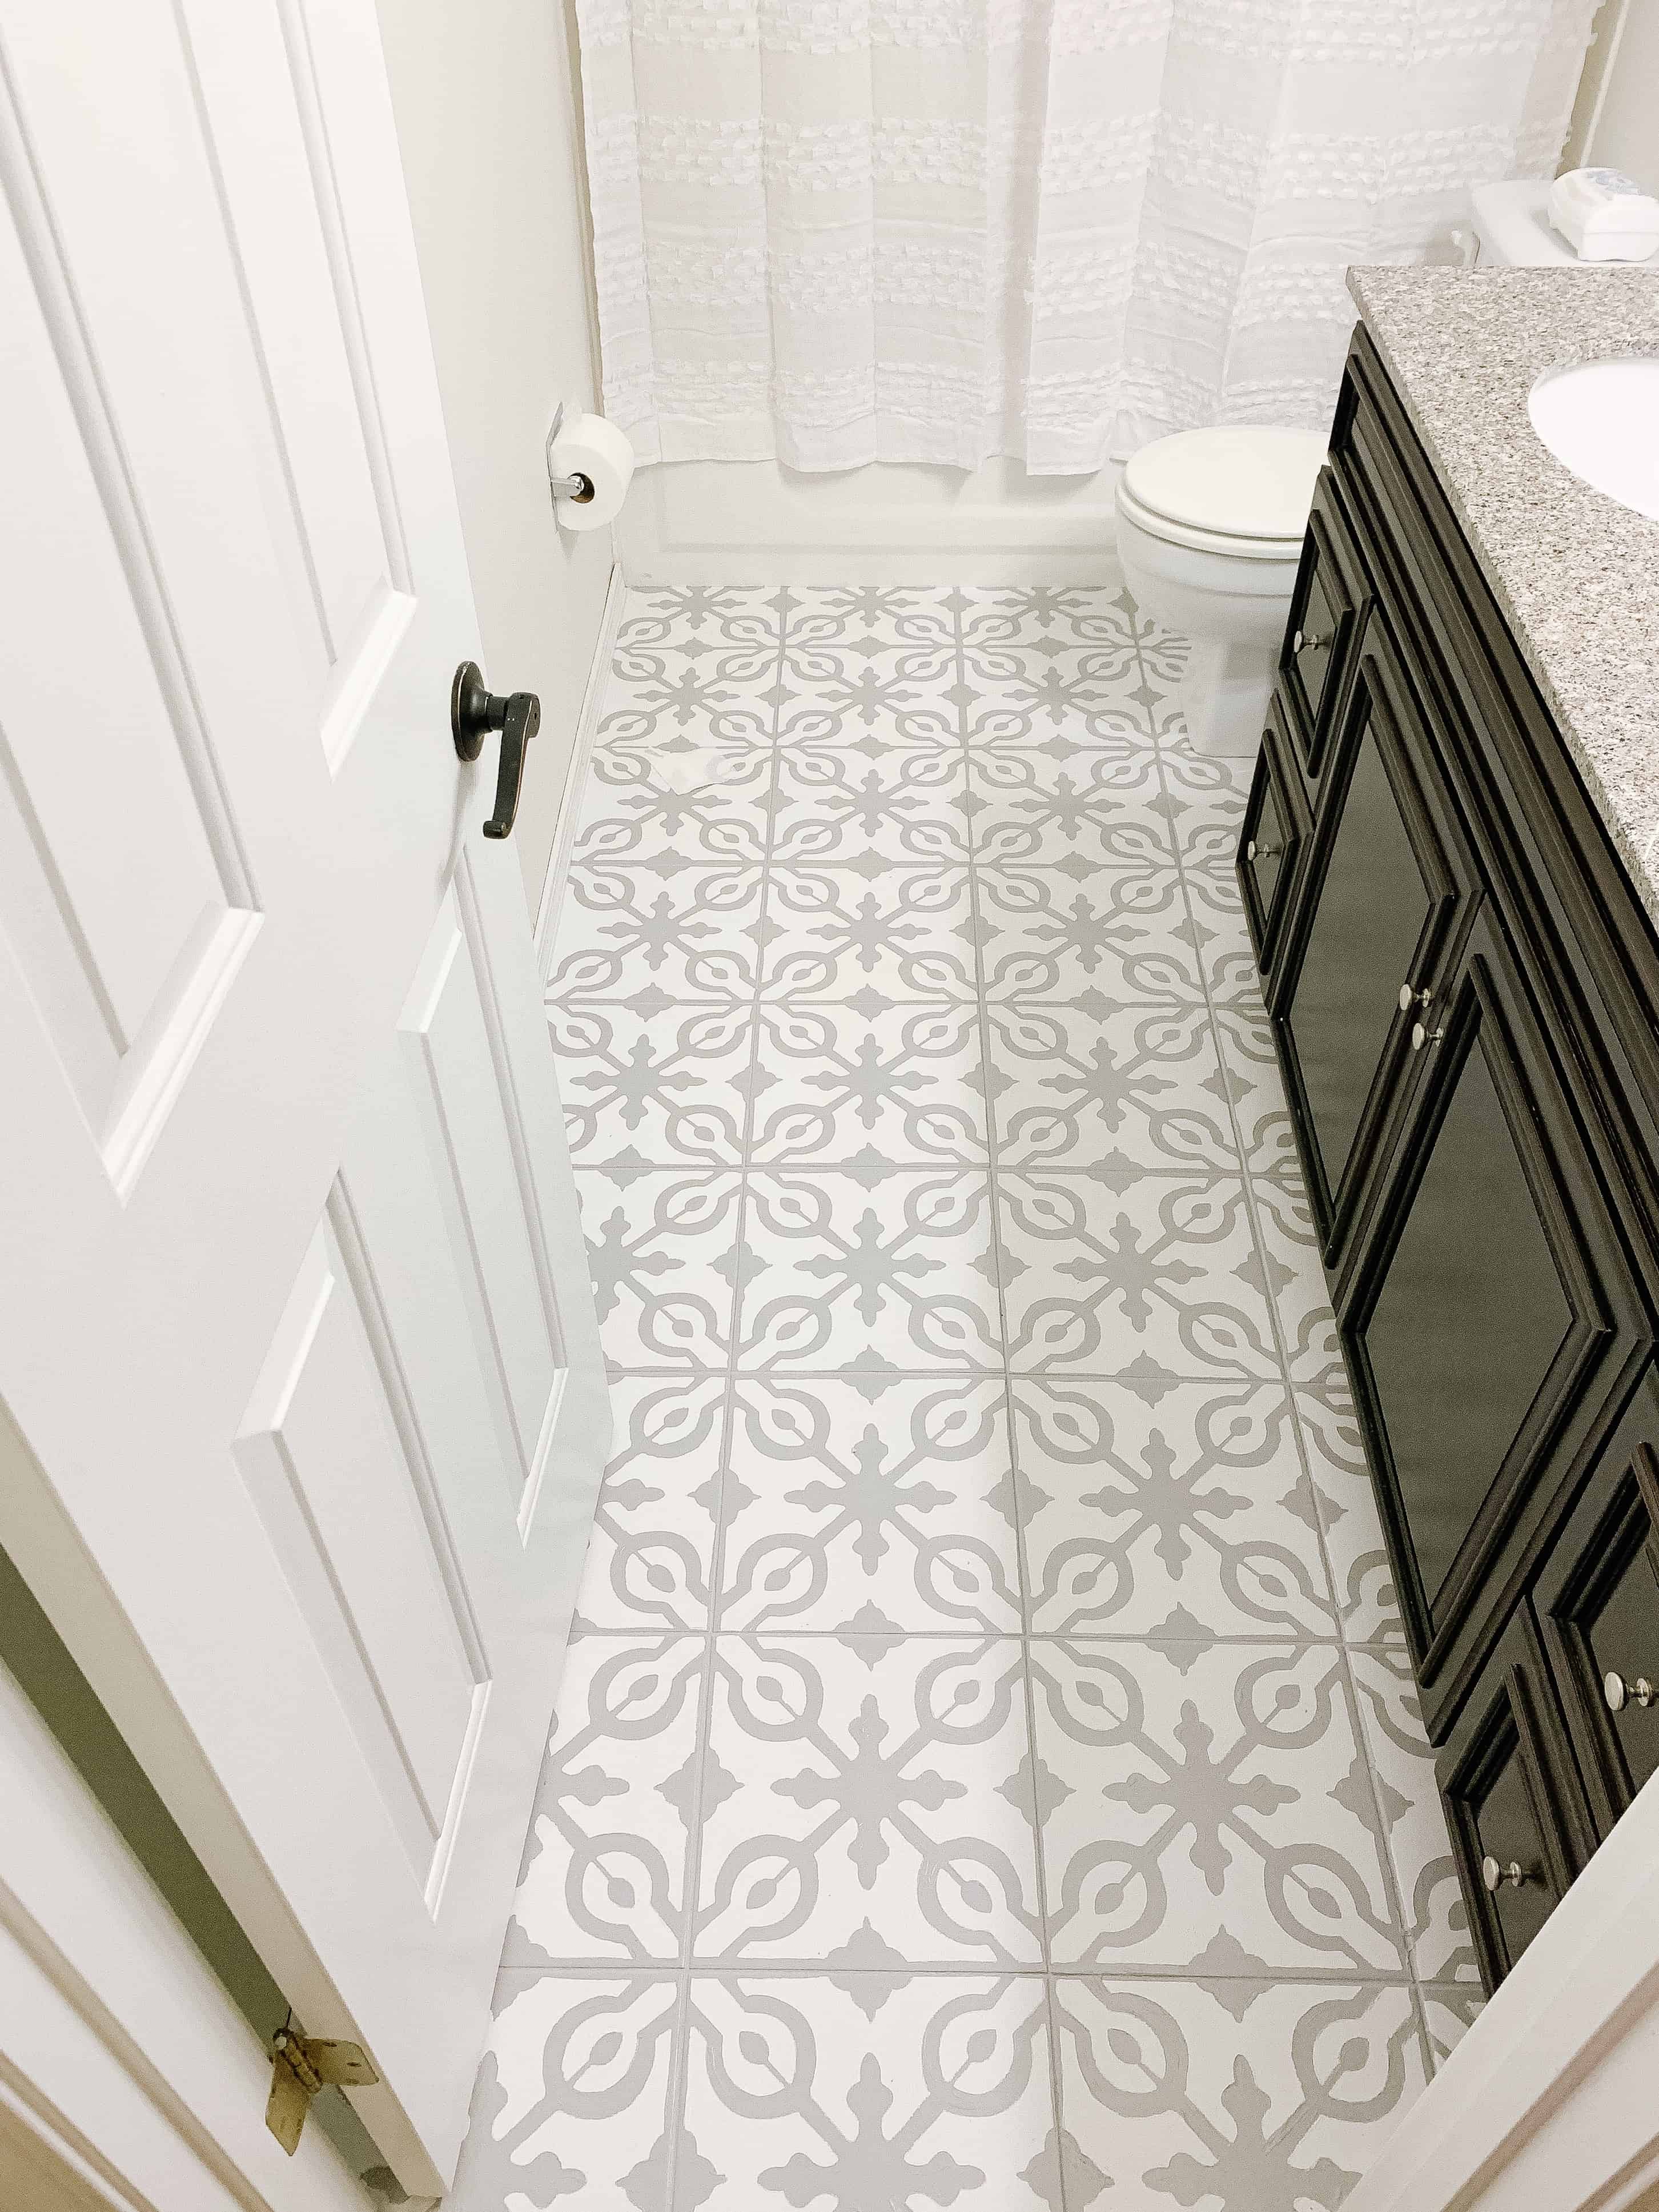 photo of painted tile bathroom floor 